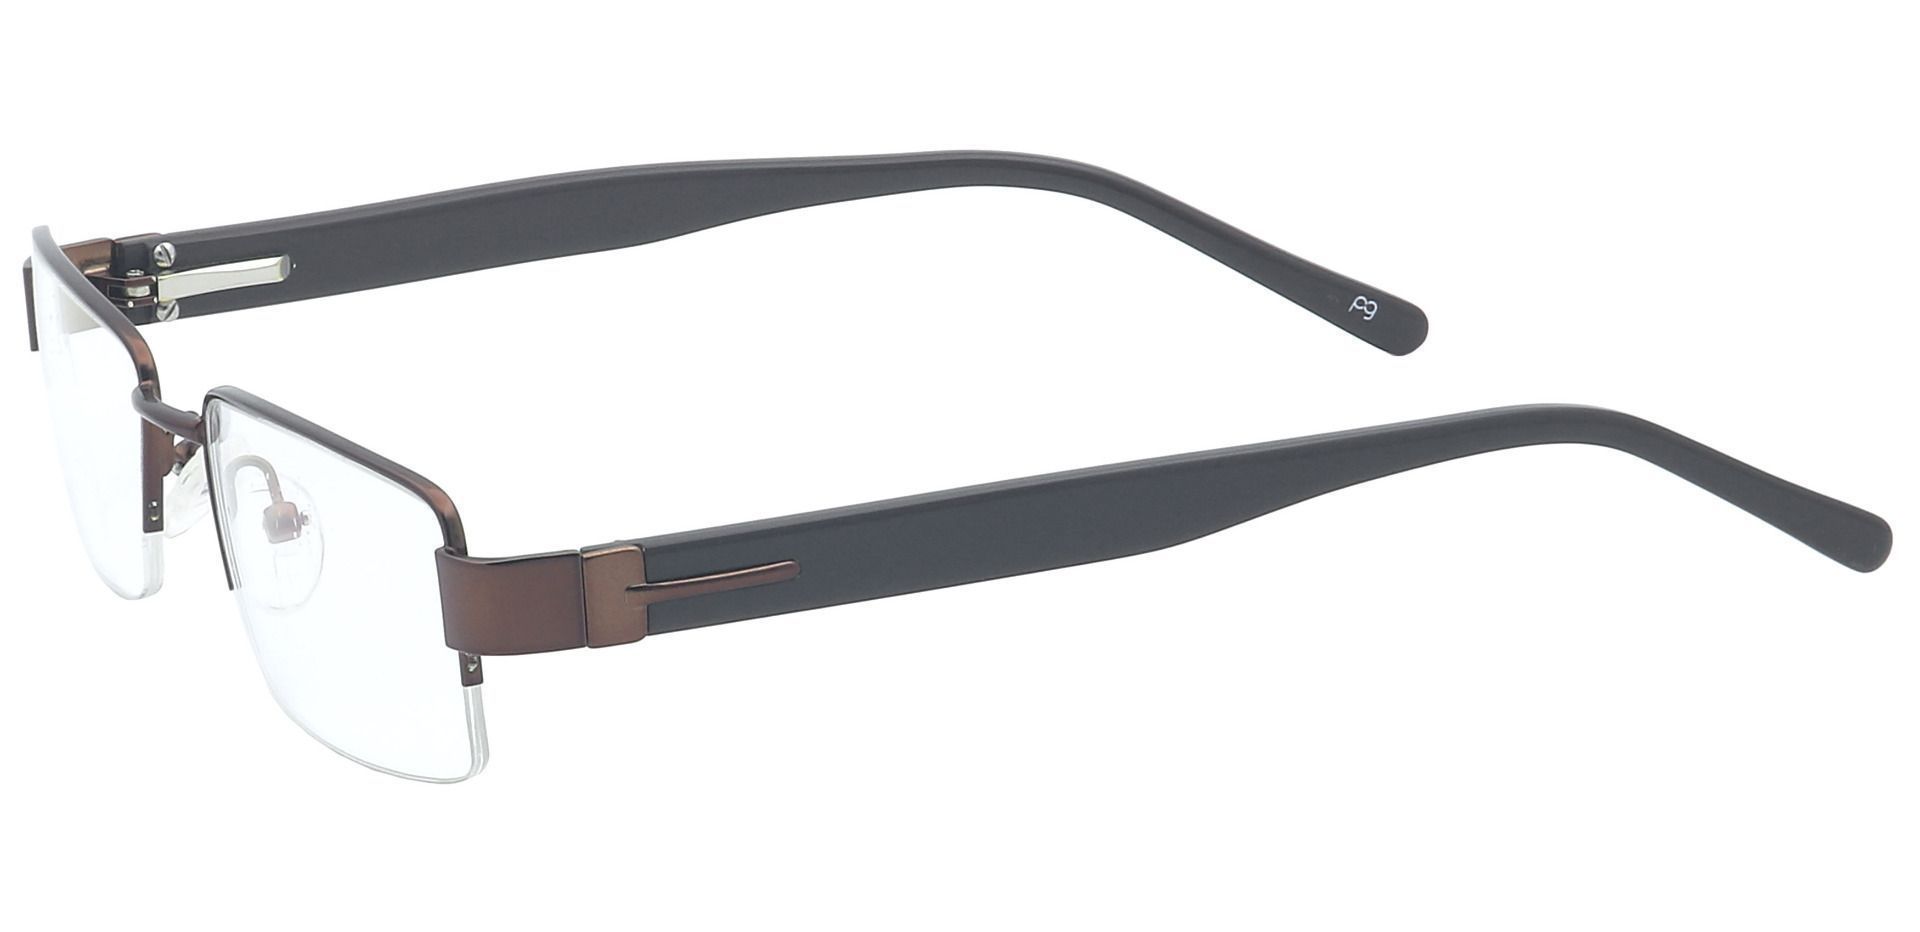 Roger Rectangle Lined Bifocal Glasses - Brown